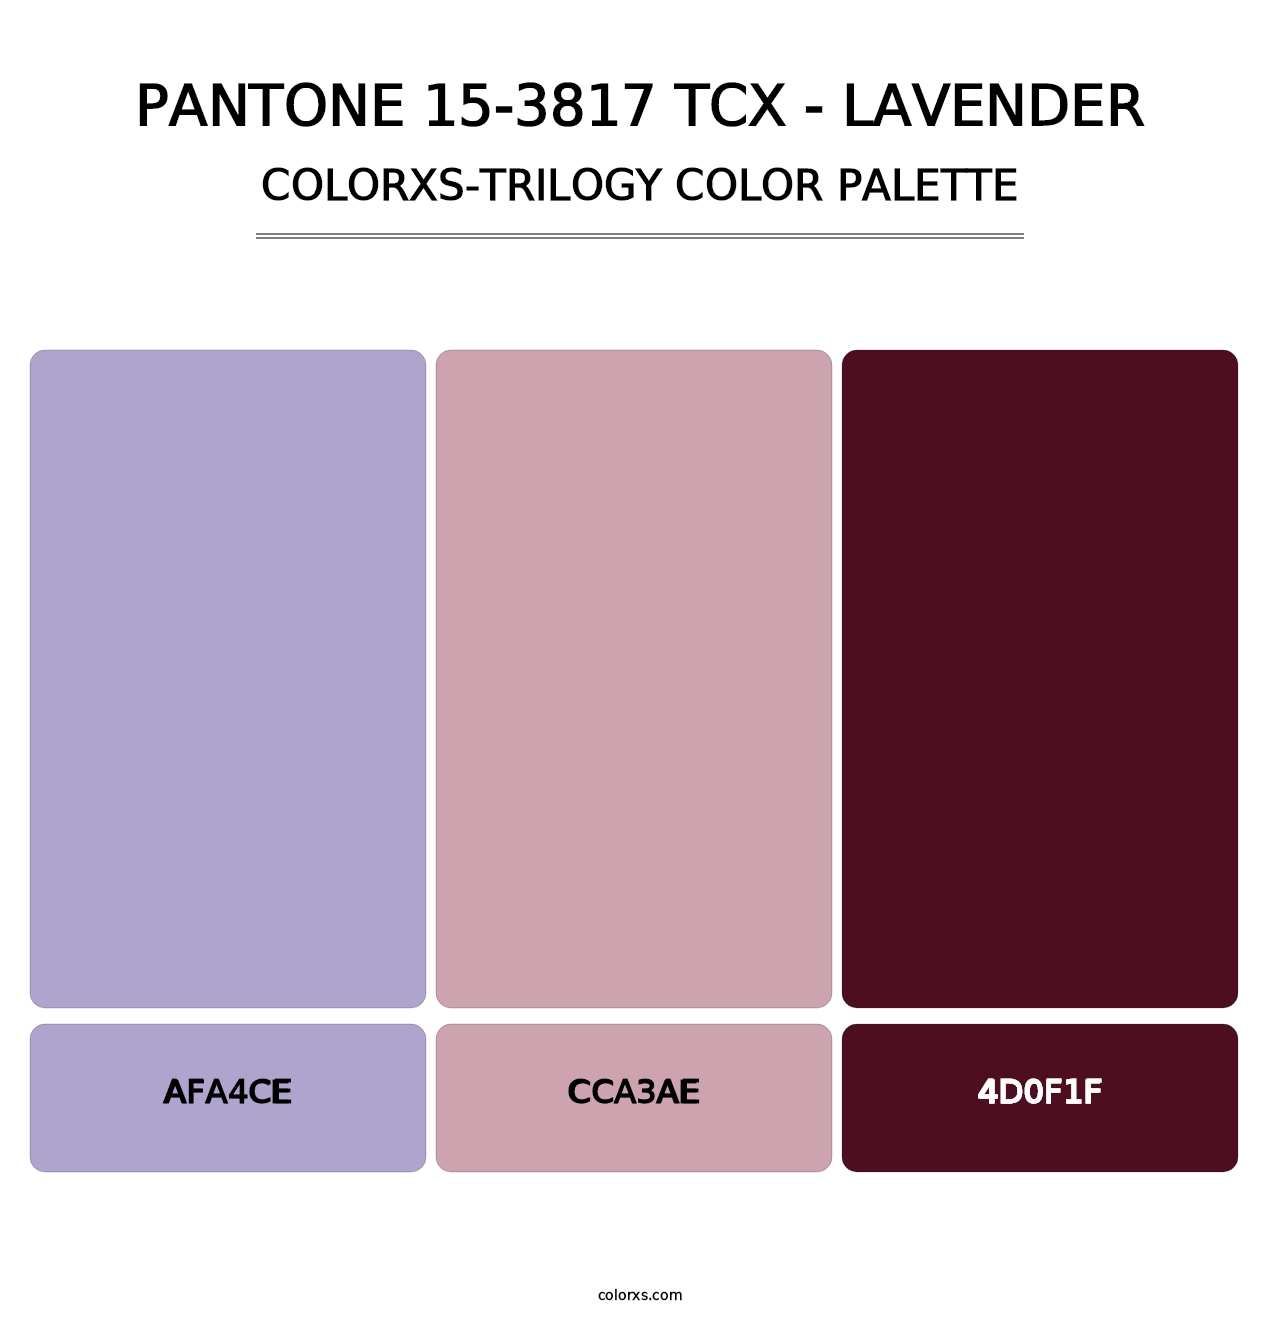 PANTONE 15-3817 TCX - Lavender - Colorxs Trilogy Palette